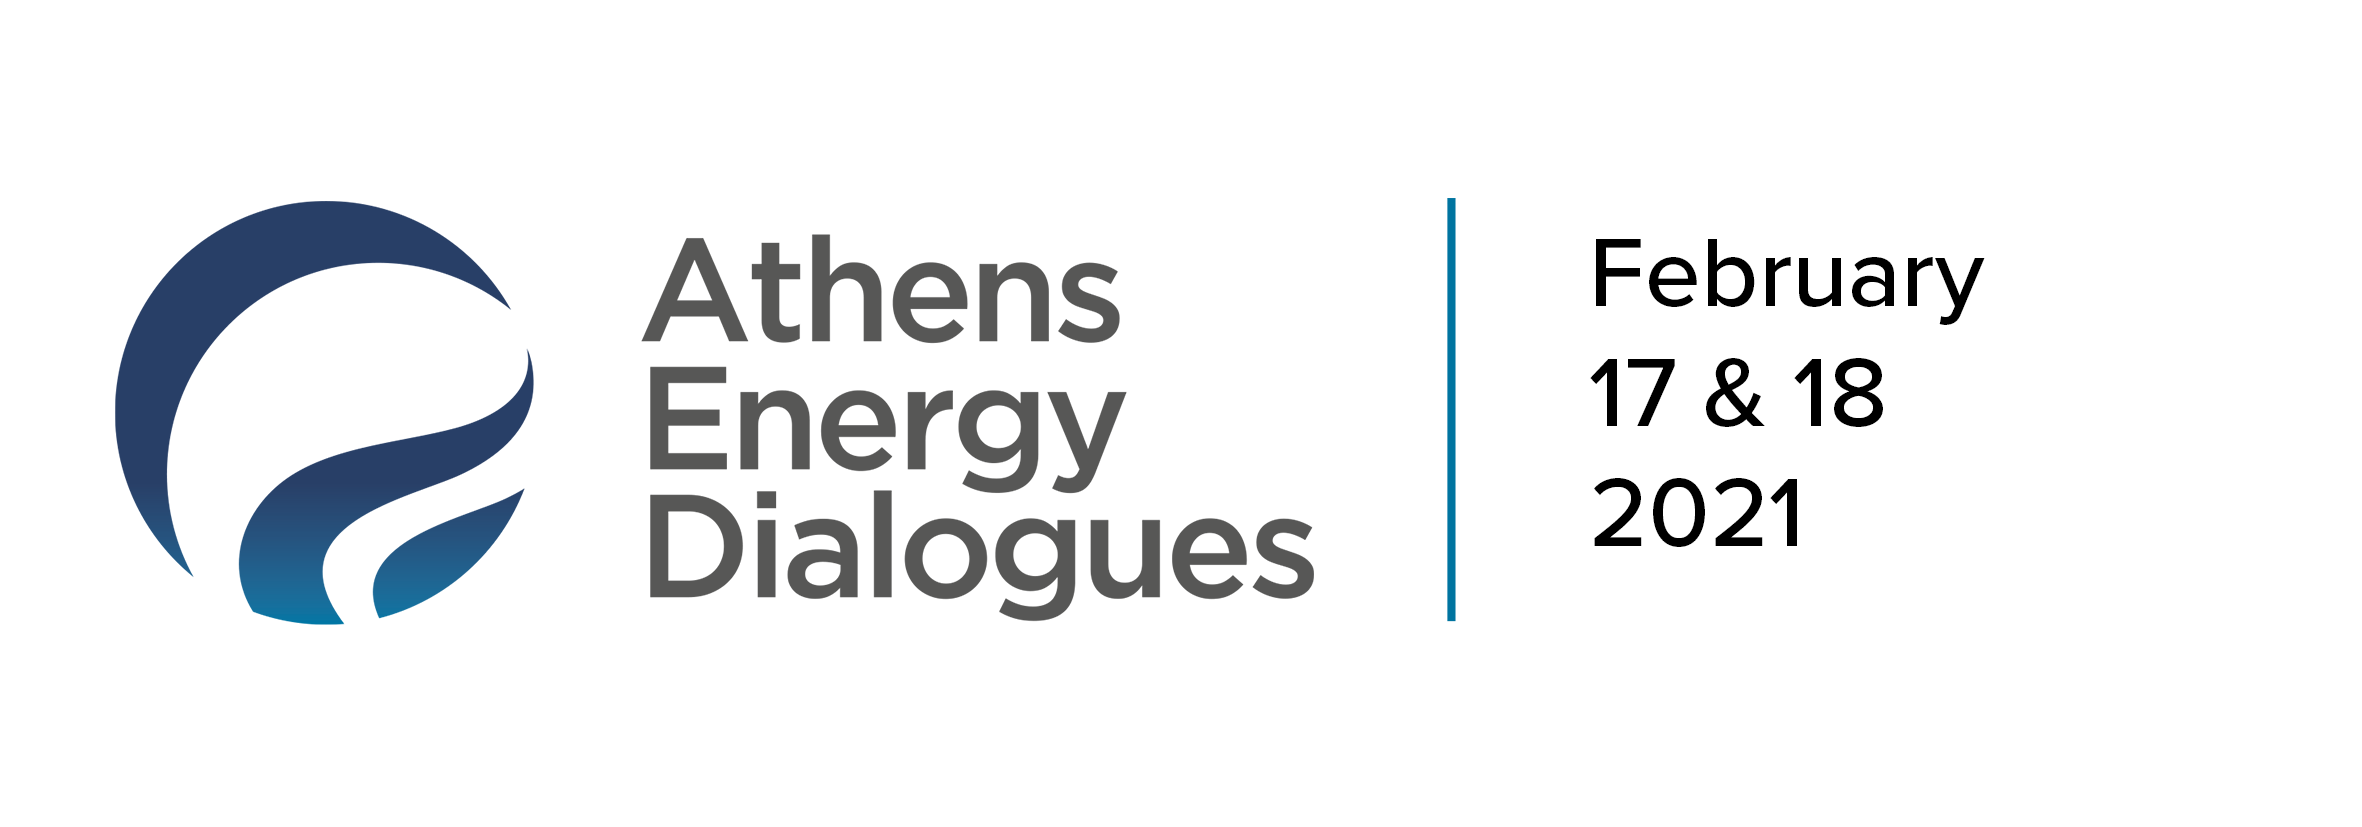 Athens Energy